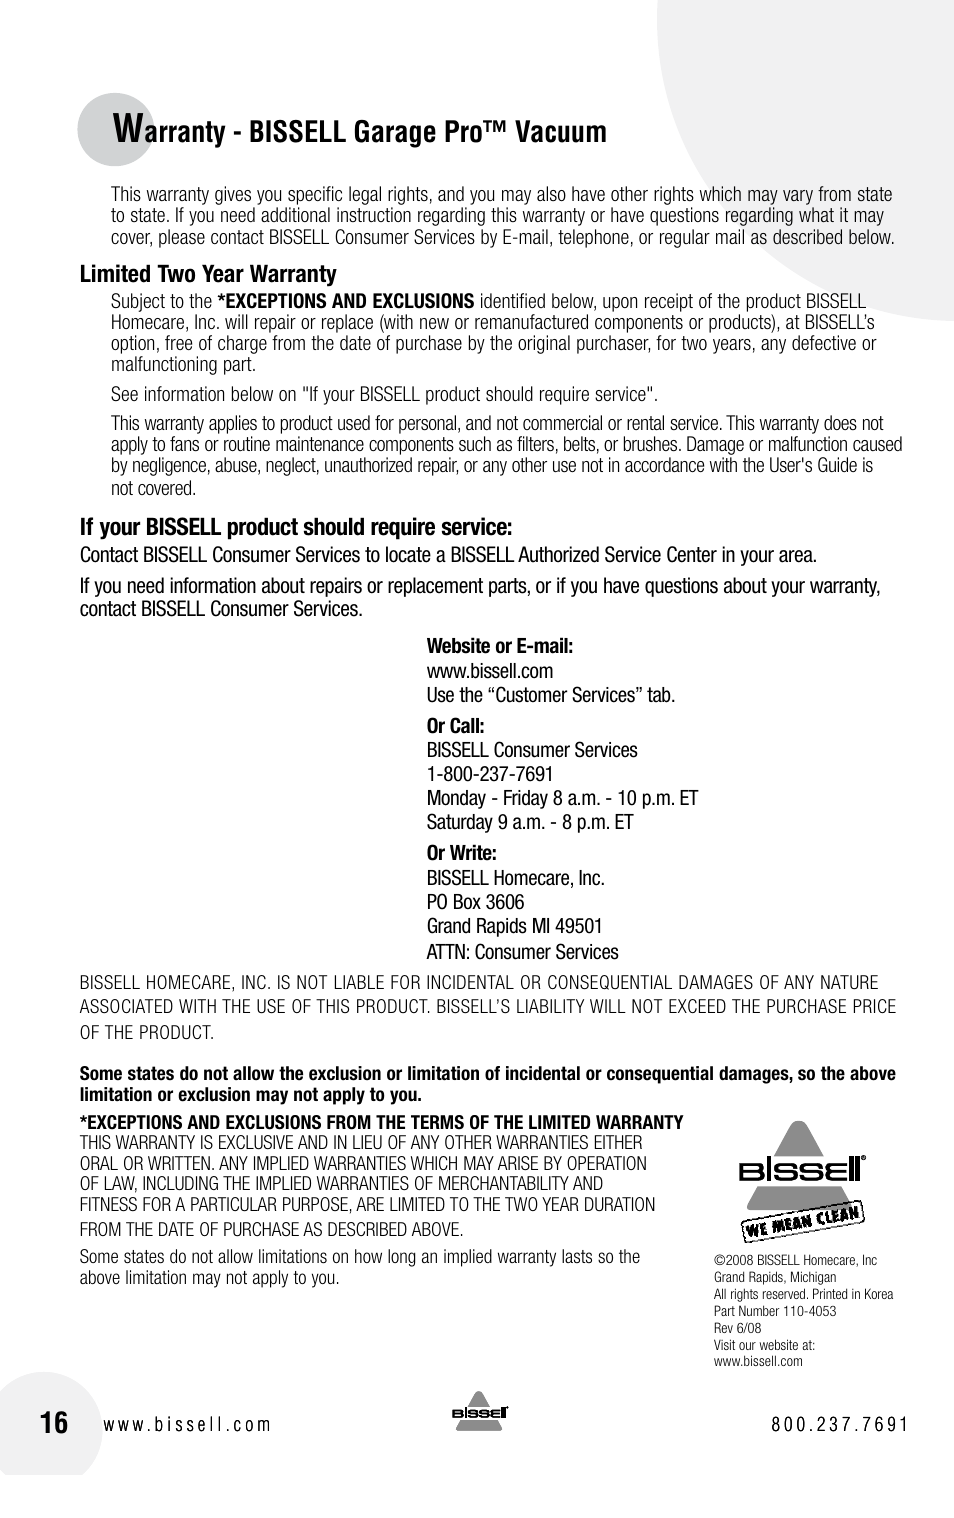 Arranty - bissell garage pro™ vacuum | Bissell GARAGE PRO 18P0 User Manual | Page 16 / 16